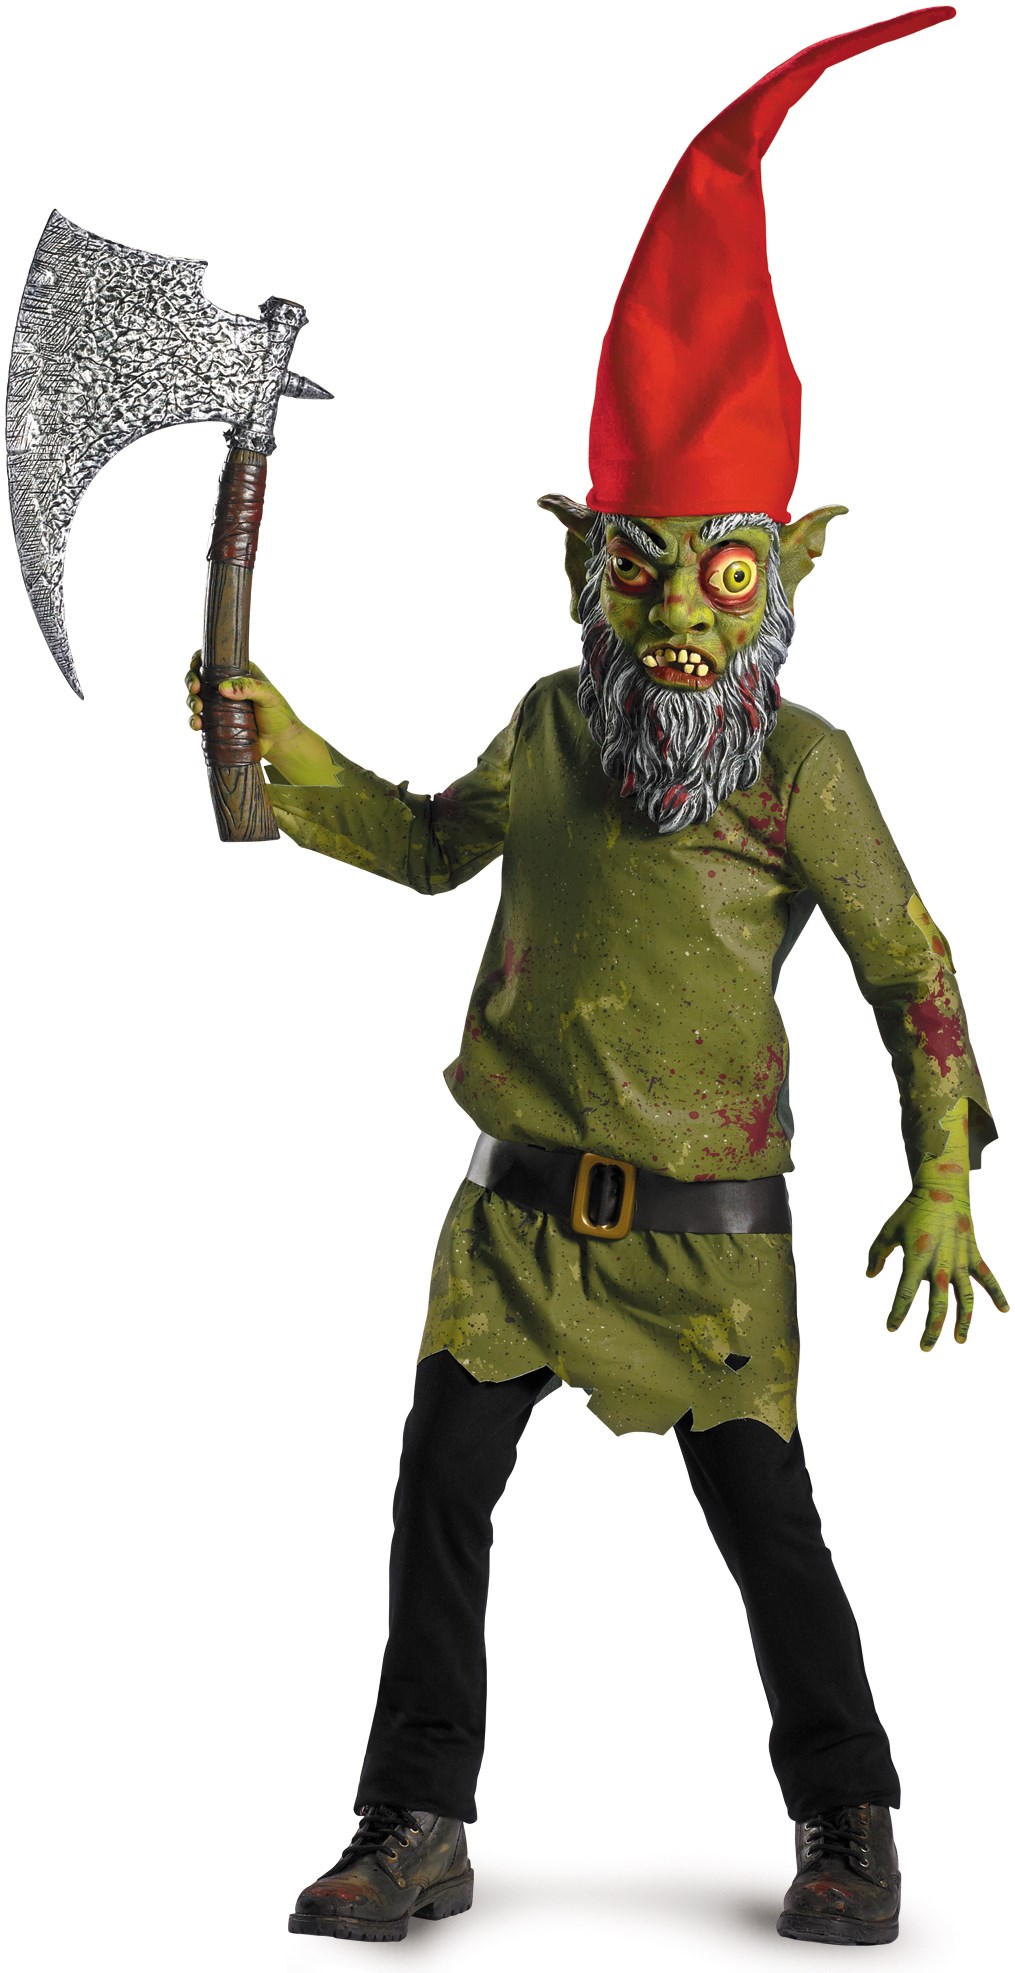 Wicked Troll Child Costume